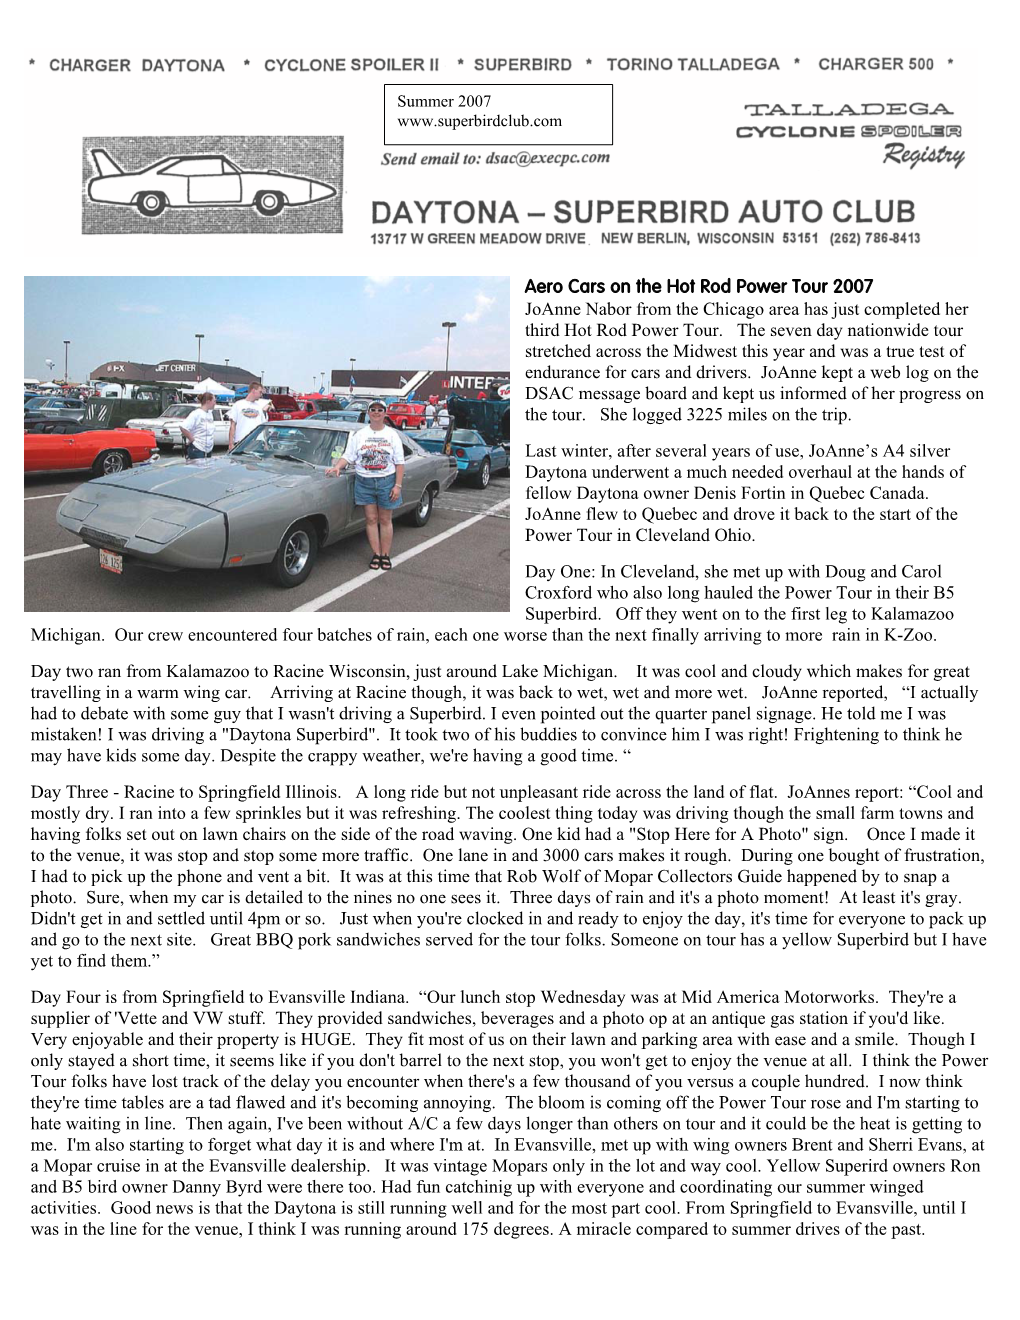 DAYTONA-SUPERBIRD AUTO CLUB WHEELS & DEALS Personal for Sale